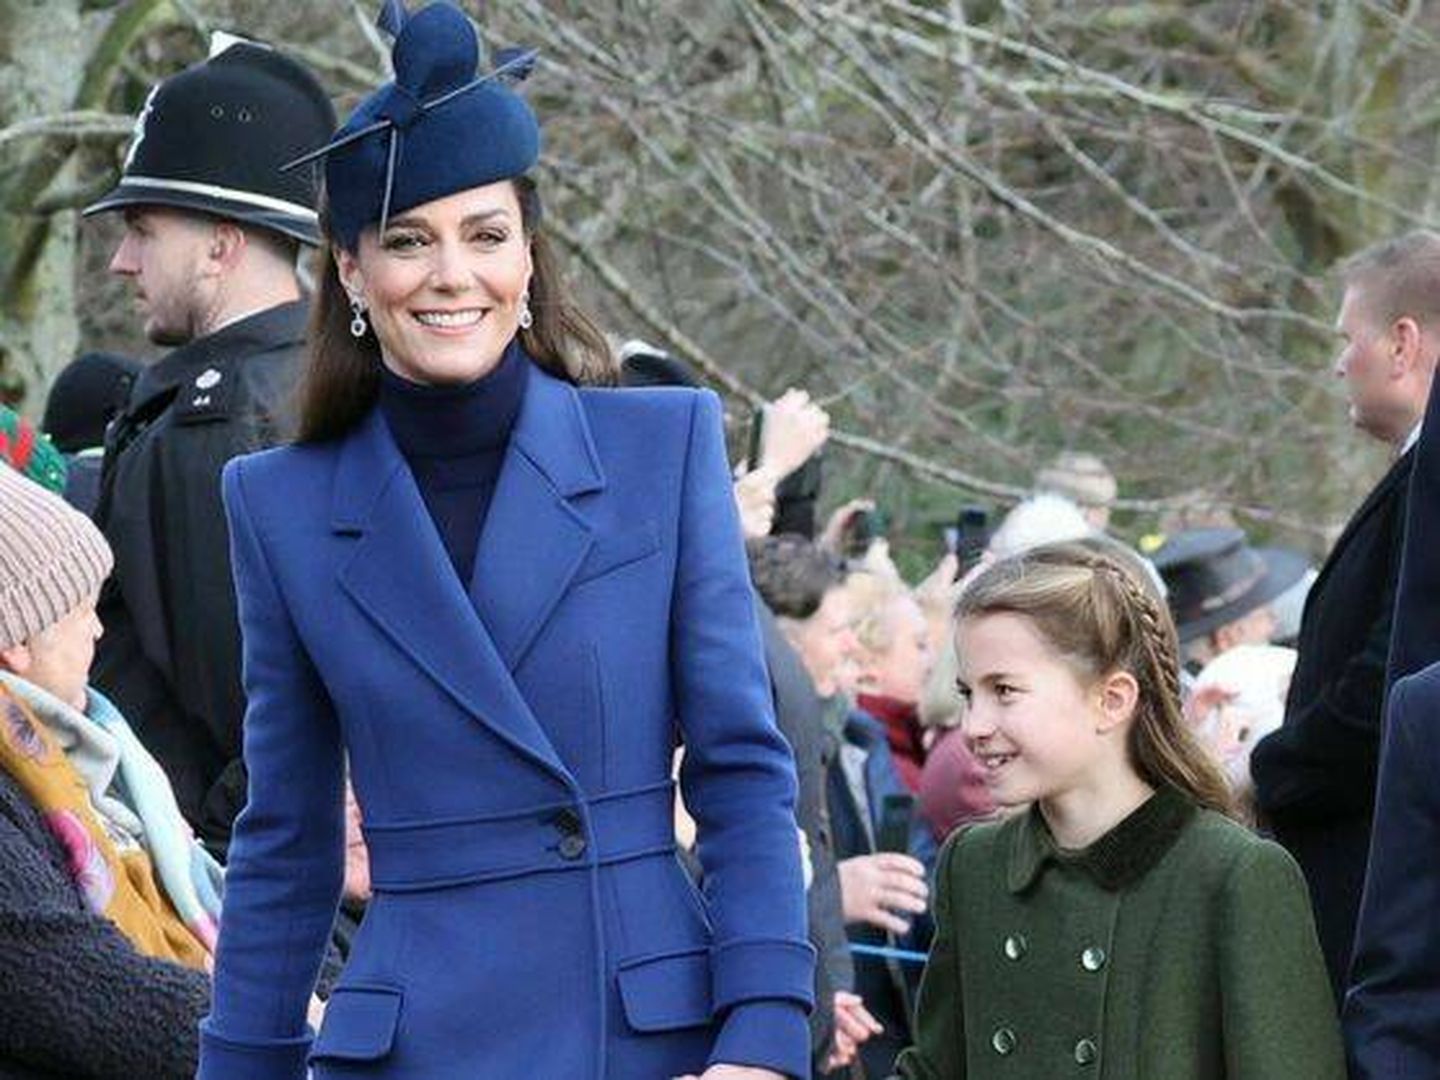 Kate Middleton elige el sombrero de paja ala ancha